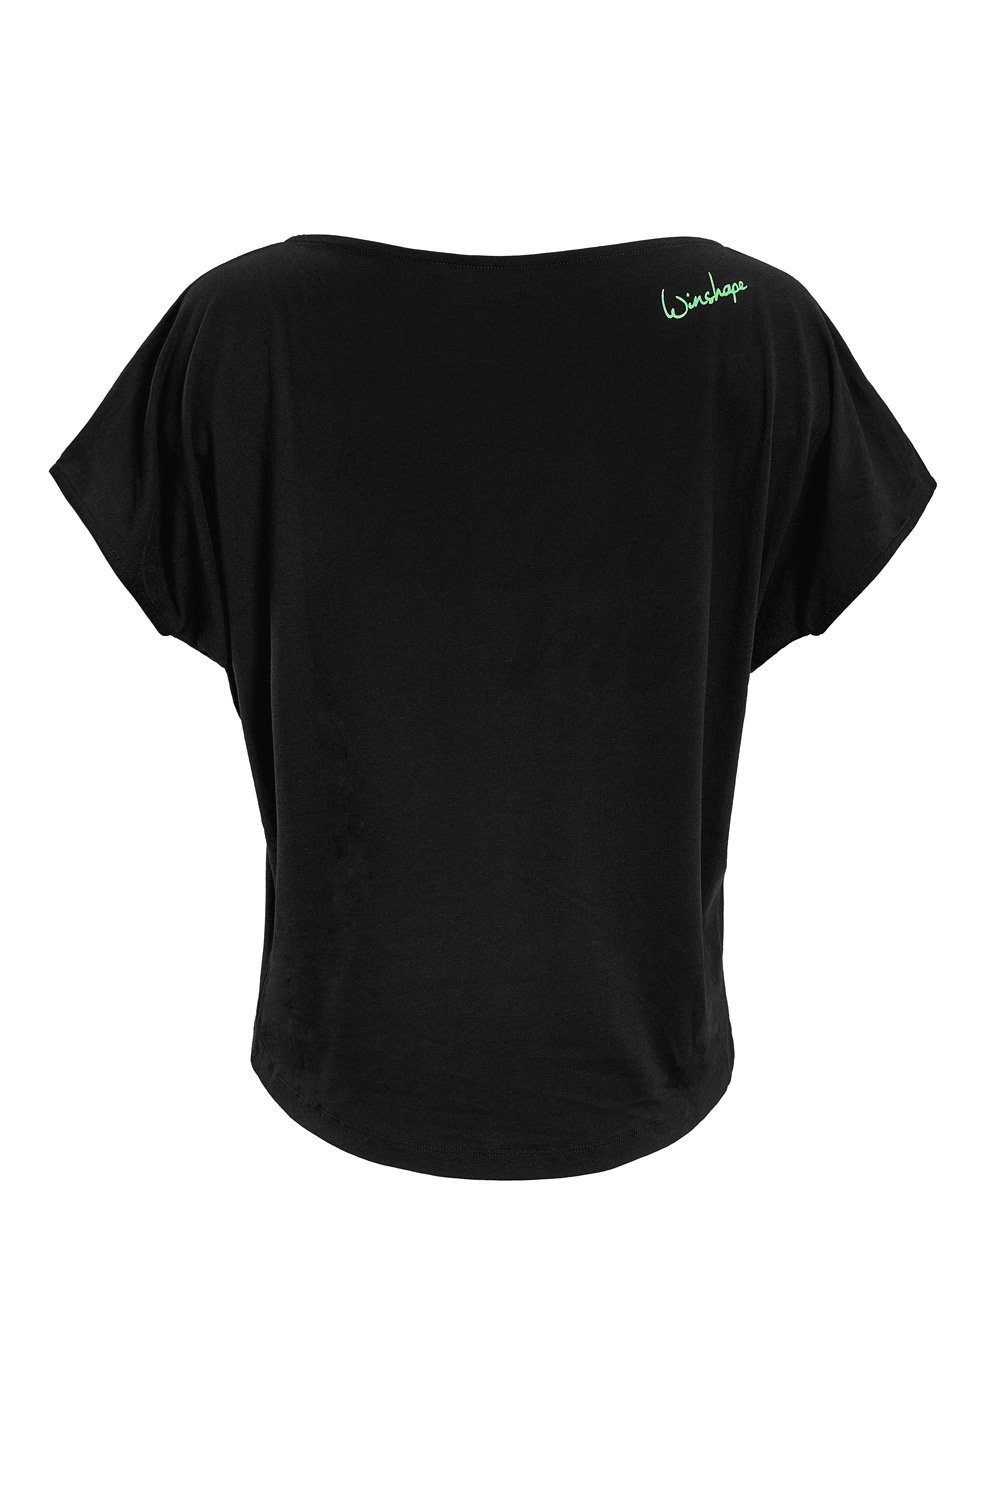 Winshape Oversize-Shirt MCT002 Neon grünem Glitzer-Aufdruck leicht mit ultra